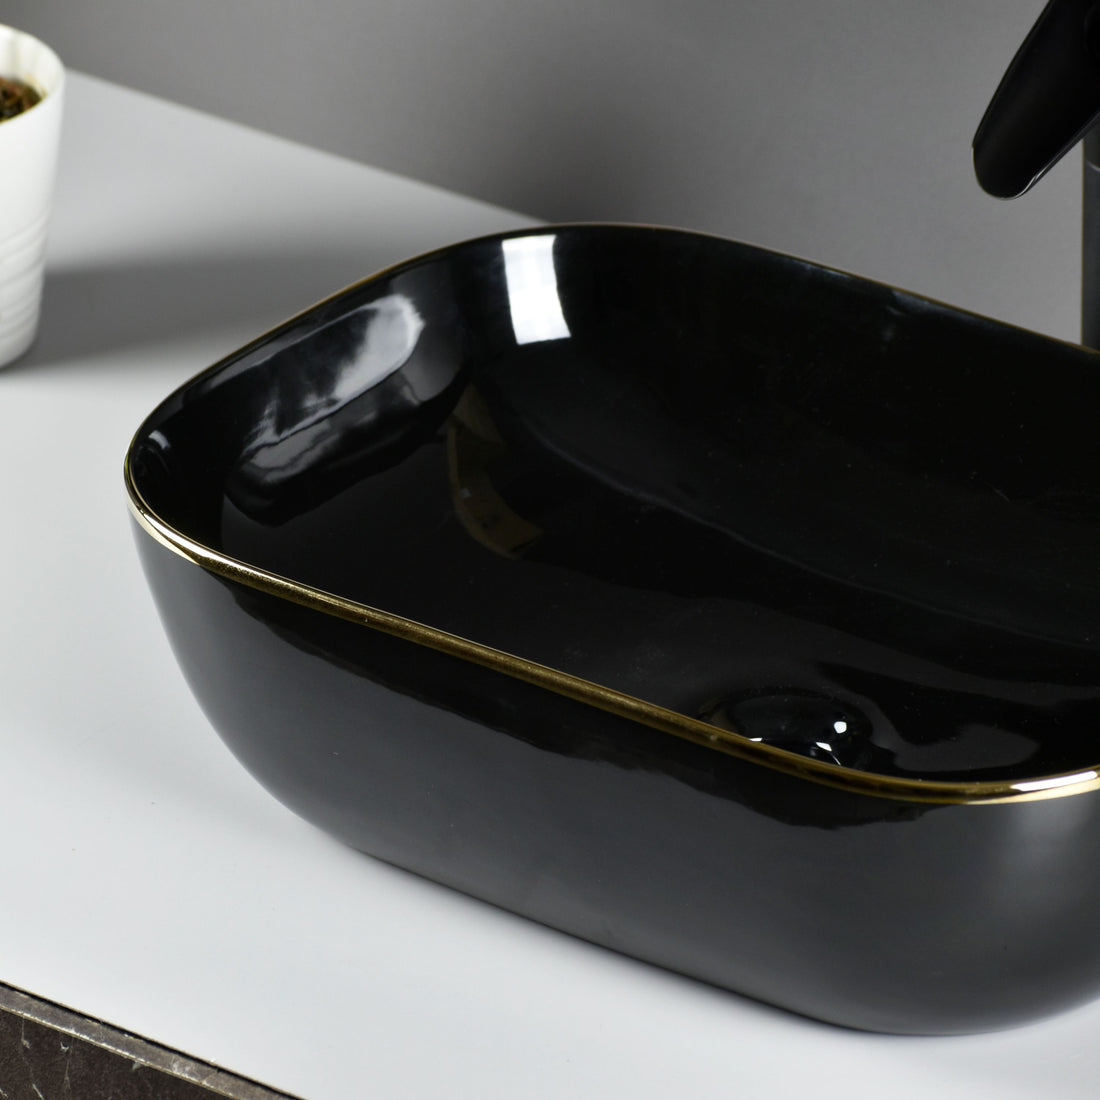 InArt Designer Ceramic Wash Basin / (Inch 18 x 13 x 5) /Glossy Finish/Counter top/Tabletop Ceramic Bathroom Sink Black Gold - InArt-Studio